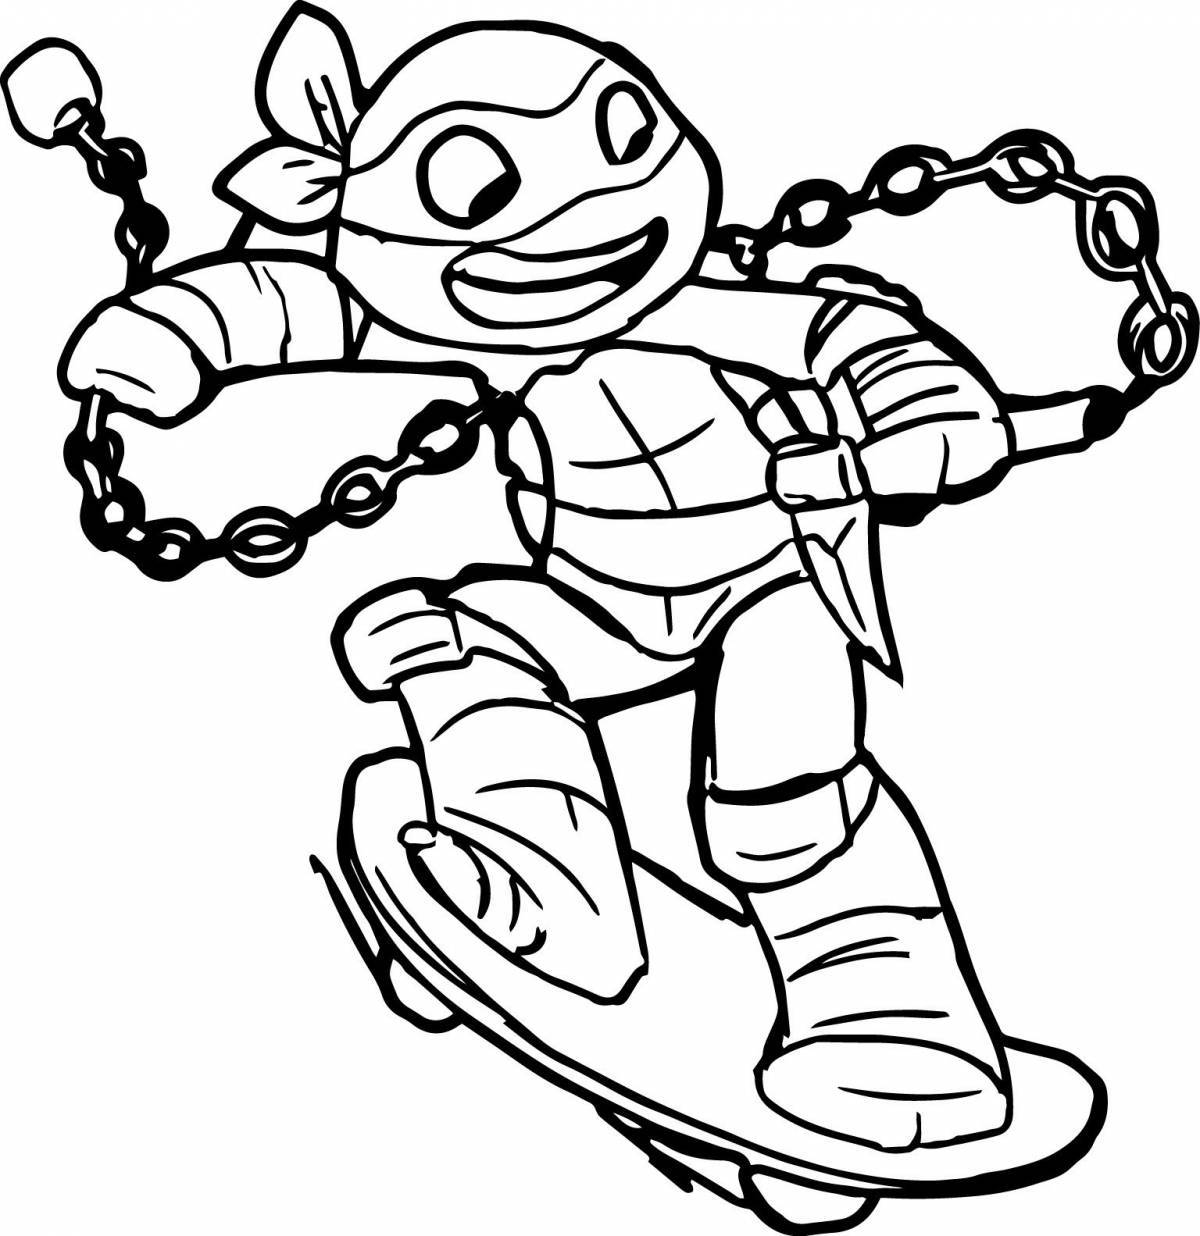 Adorable ninja turtle coloring book for kids